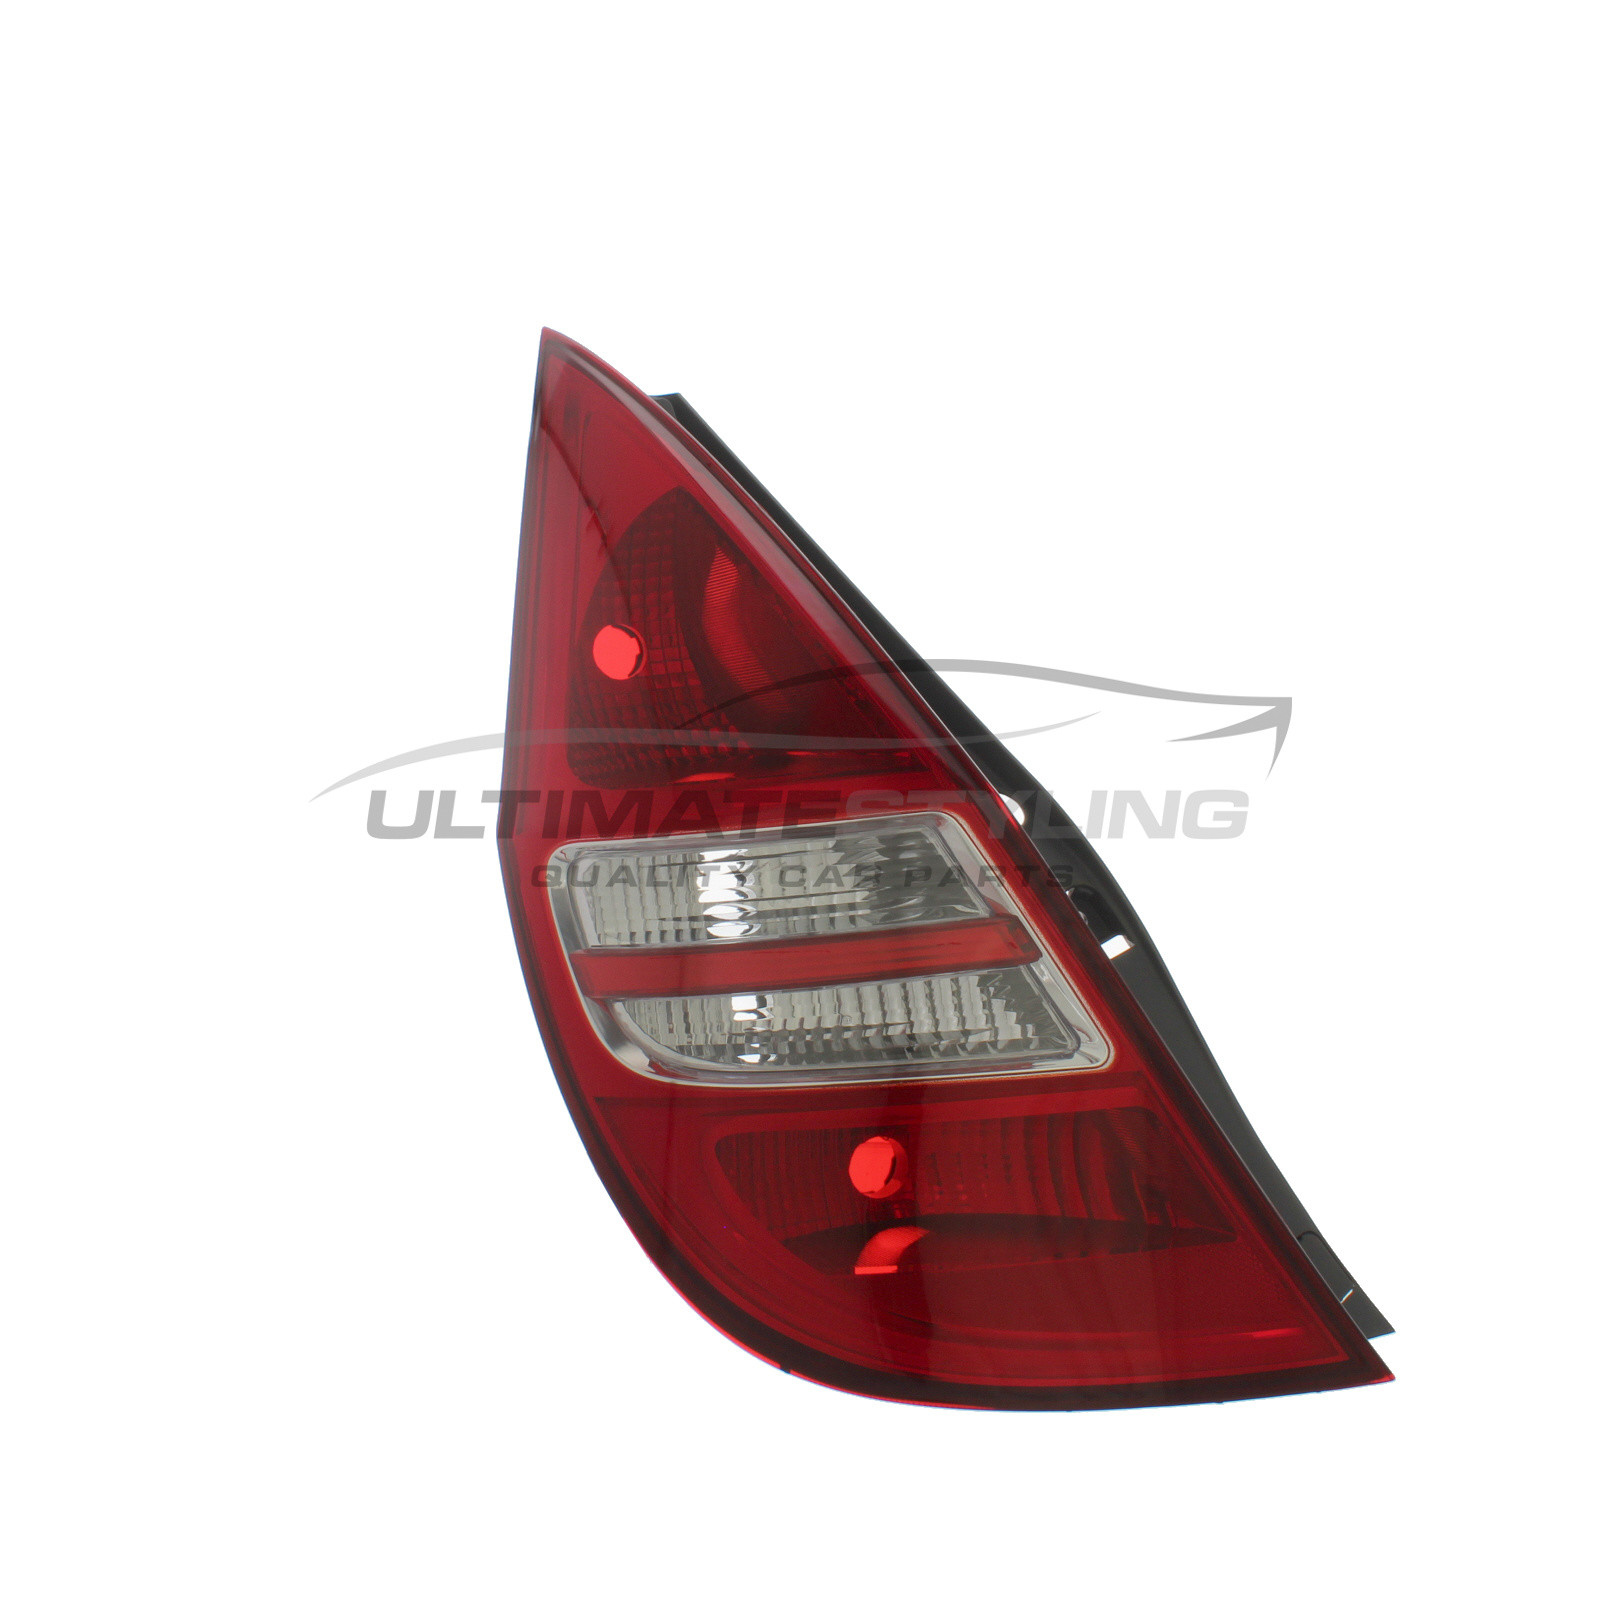 Løve Pounding Formode Hyundai i30 Rear Light / Tail Light - Passenger Side (LH), Rear - Non-LED